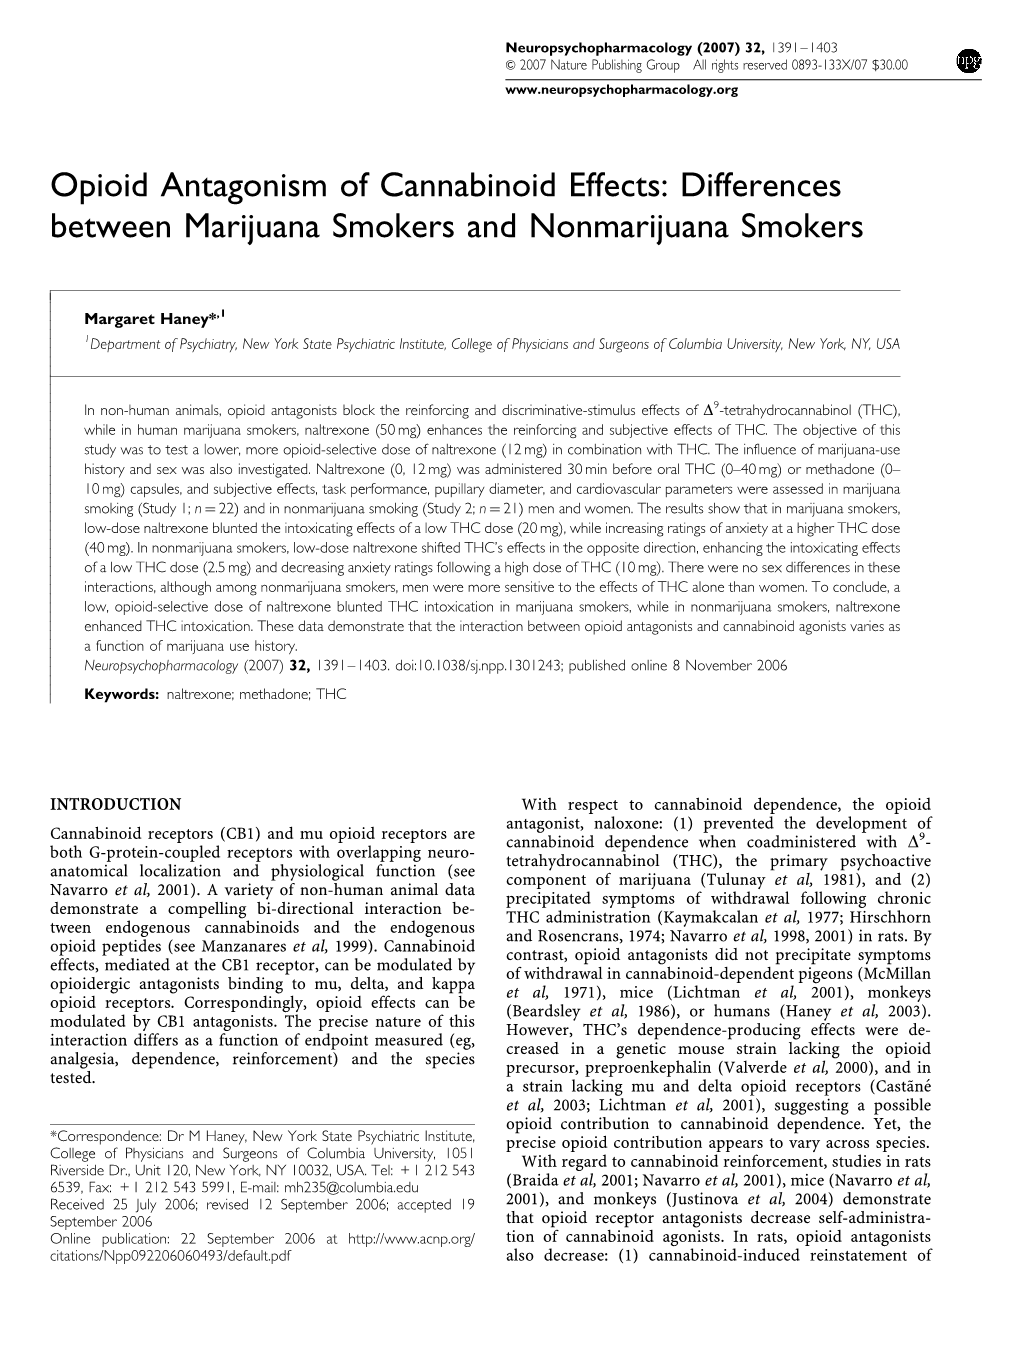 Opioid Antagonism of Cannabinoid Effects: Differences Between Marijuana Smokers and Nonmarijuana Smokers